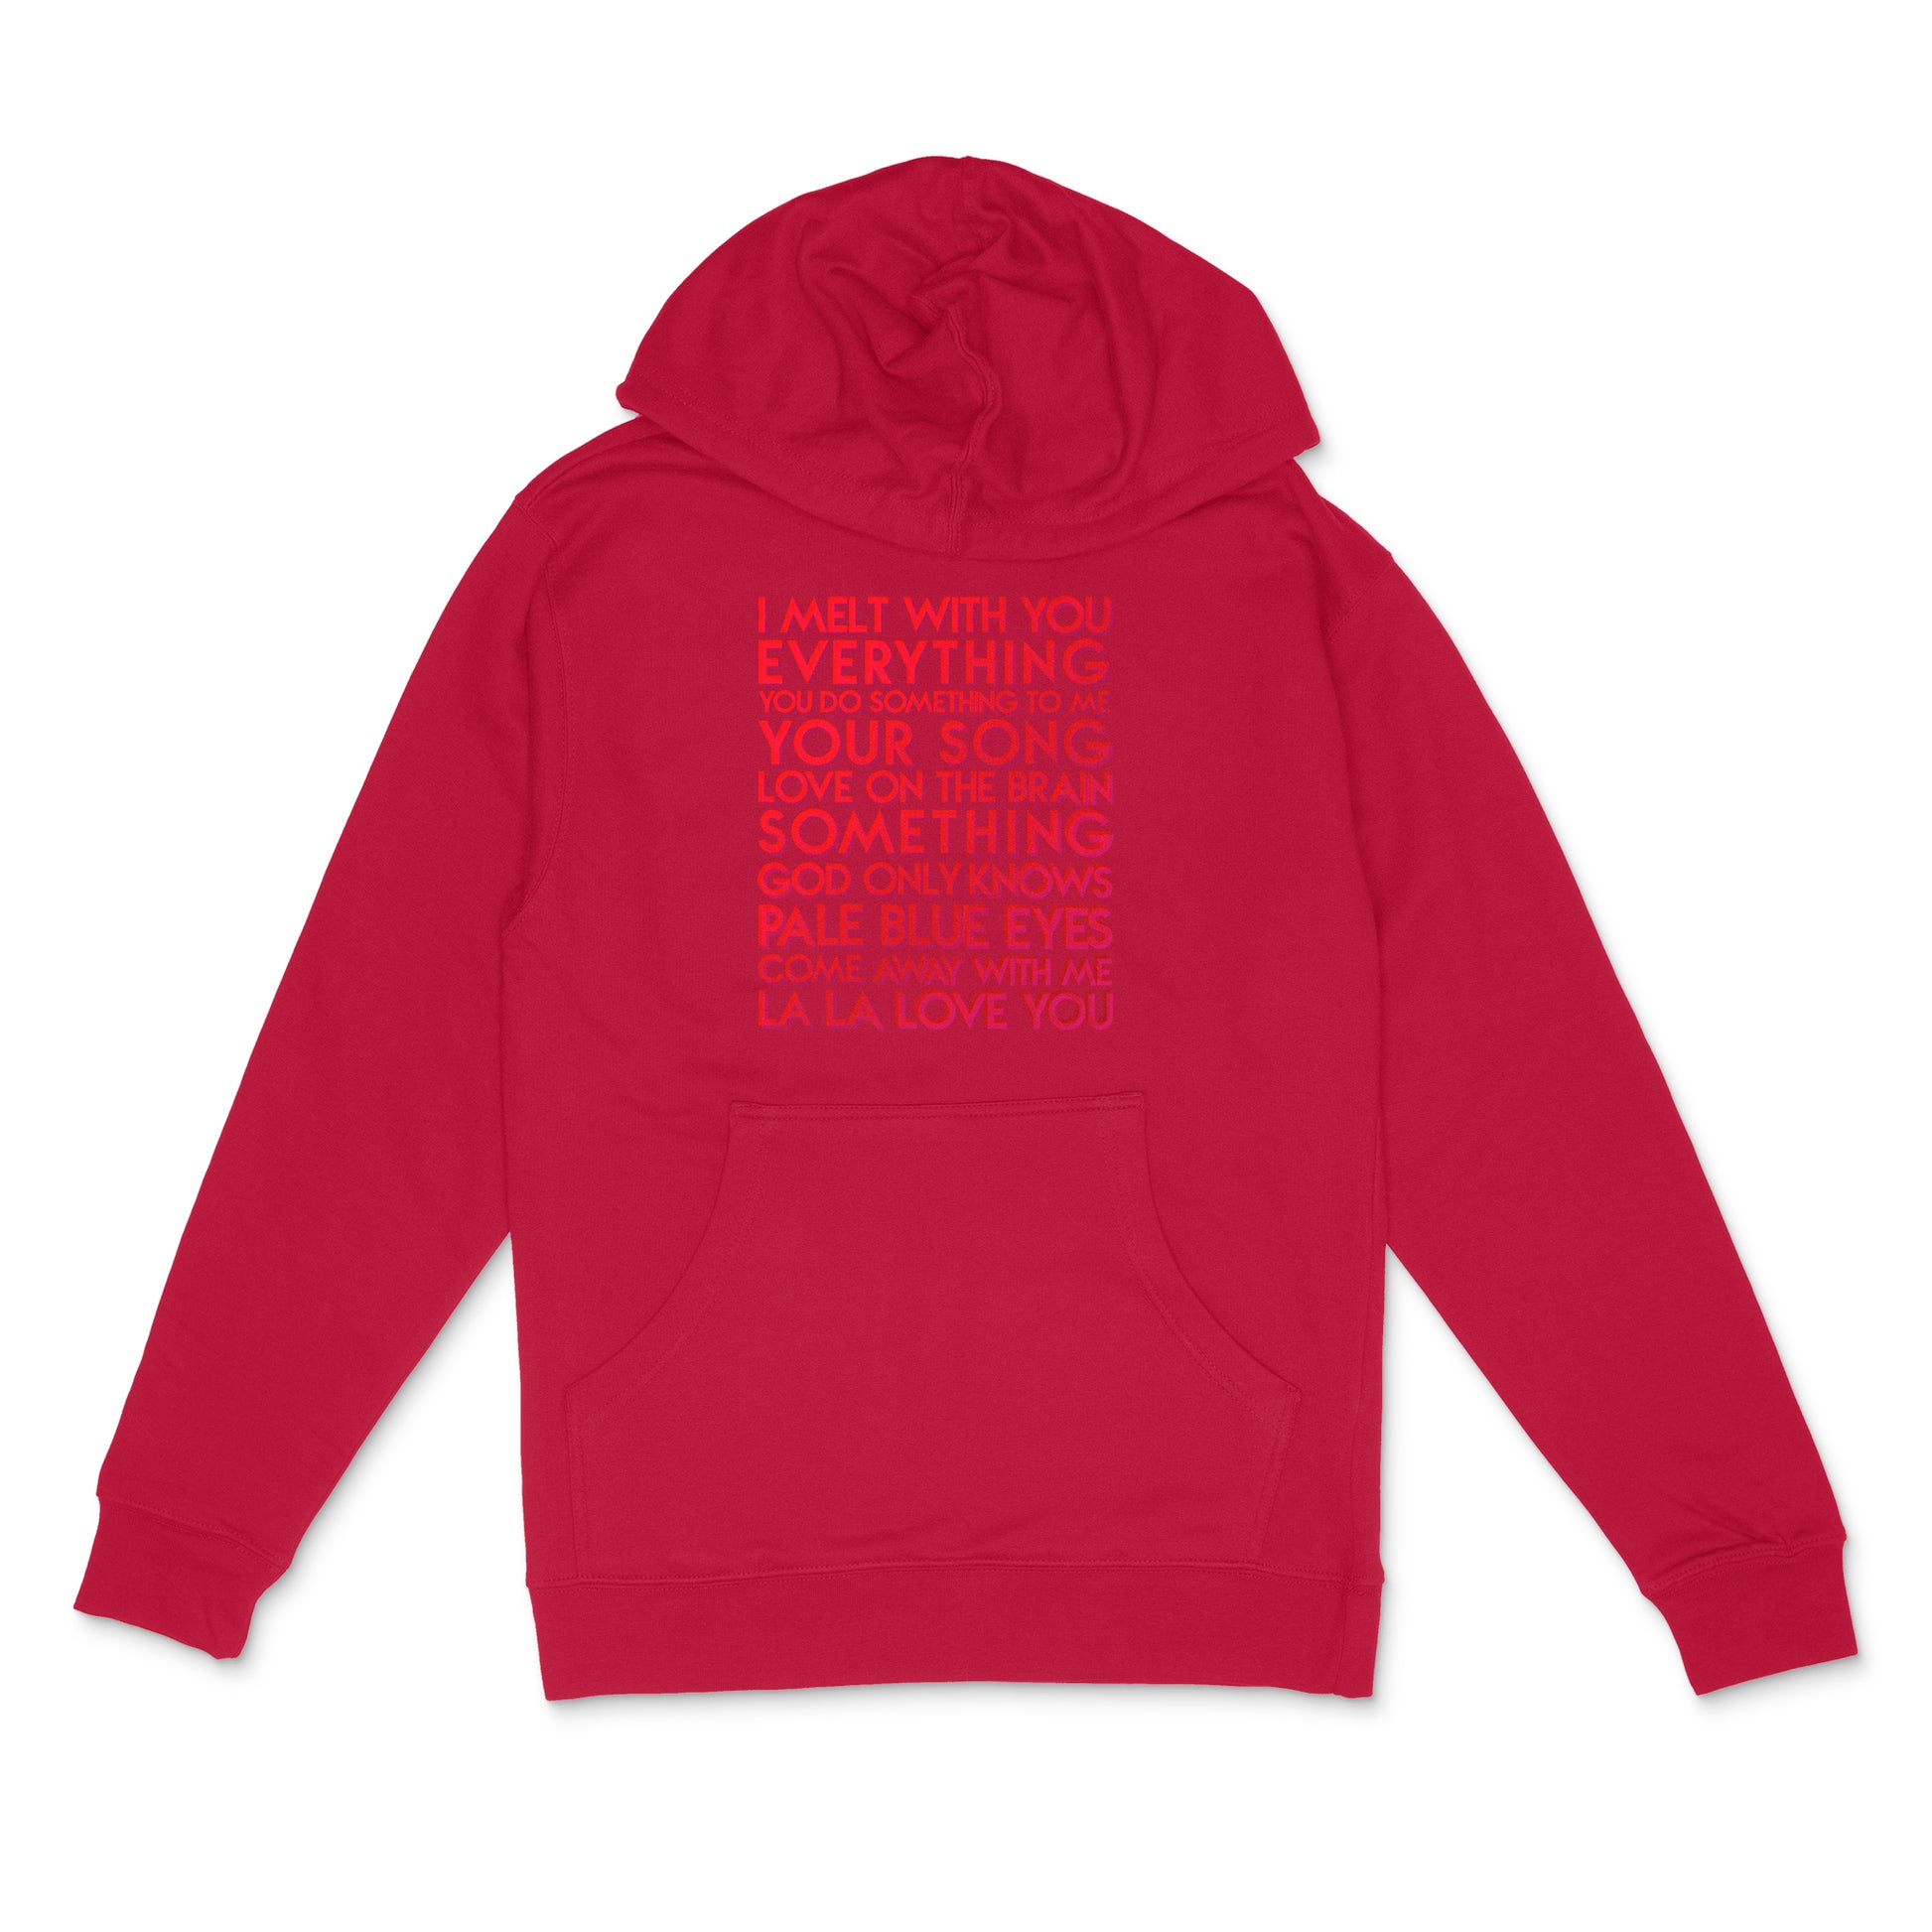 custom sample - love songs custom red metallic text on red unisex pullover hoodie - Custom YourTen sweatshirt by BBJ / Glitter Garage